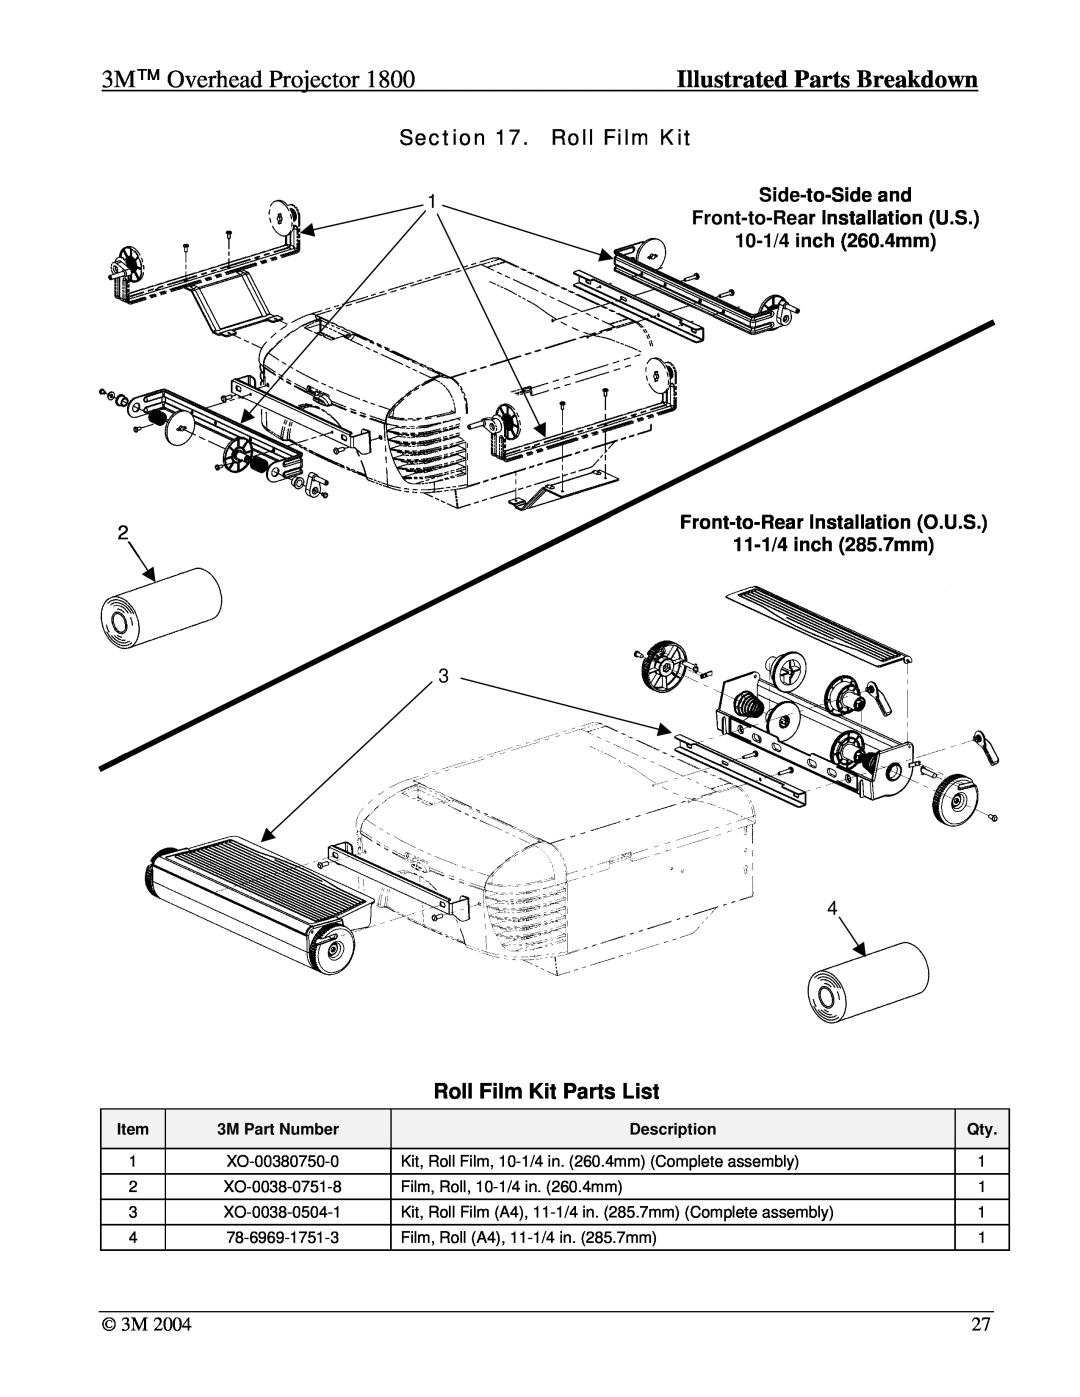 3M 1800 manual Roll Film Kit Parts List, 3M Overhead Projector, Illustrated Parts Breakdown 